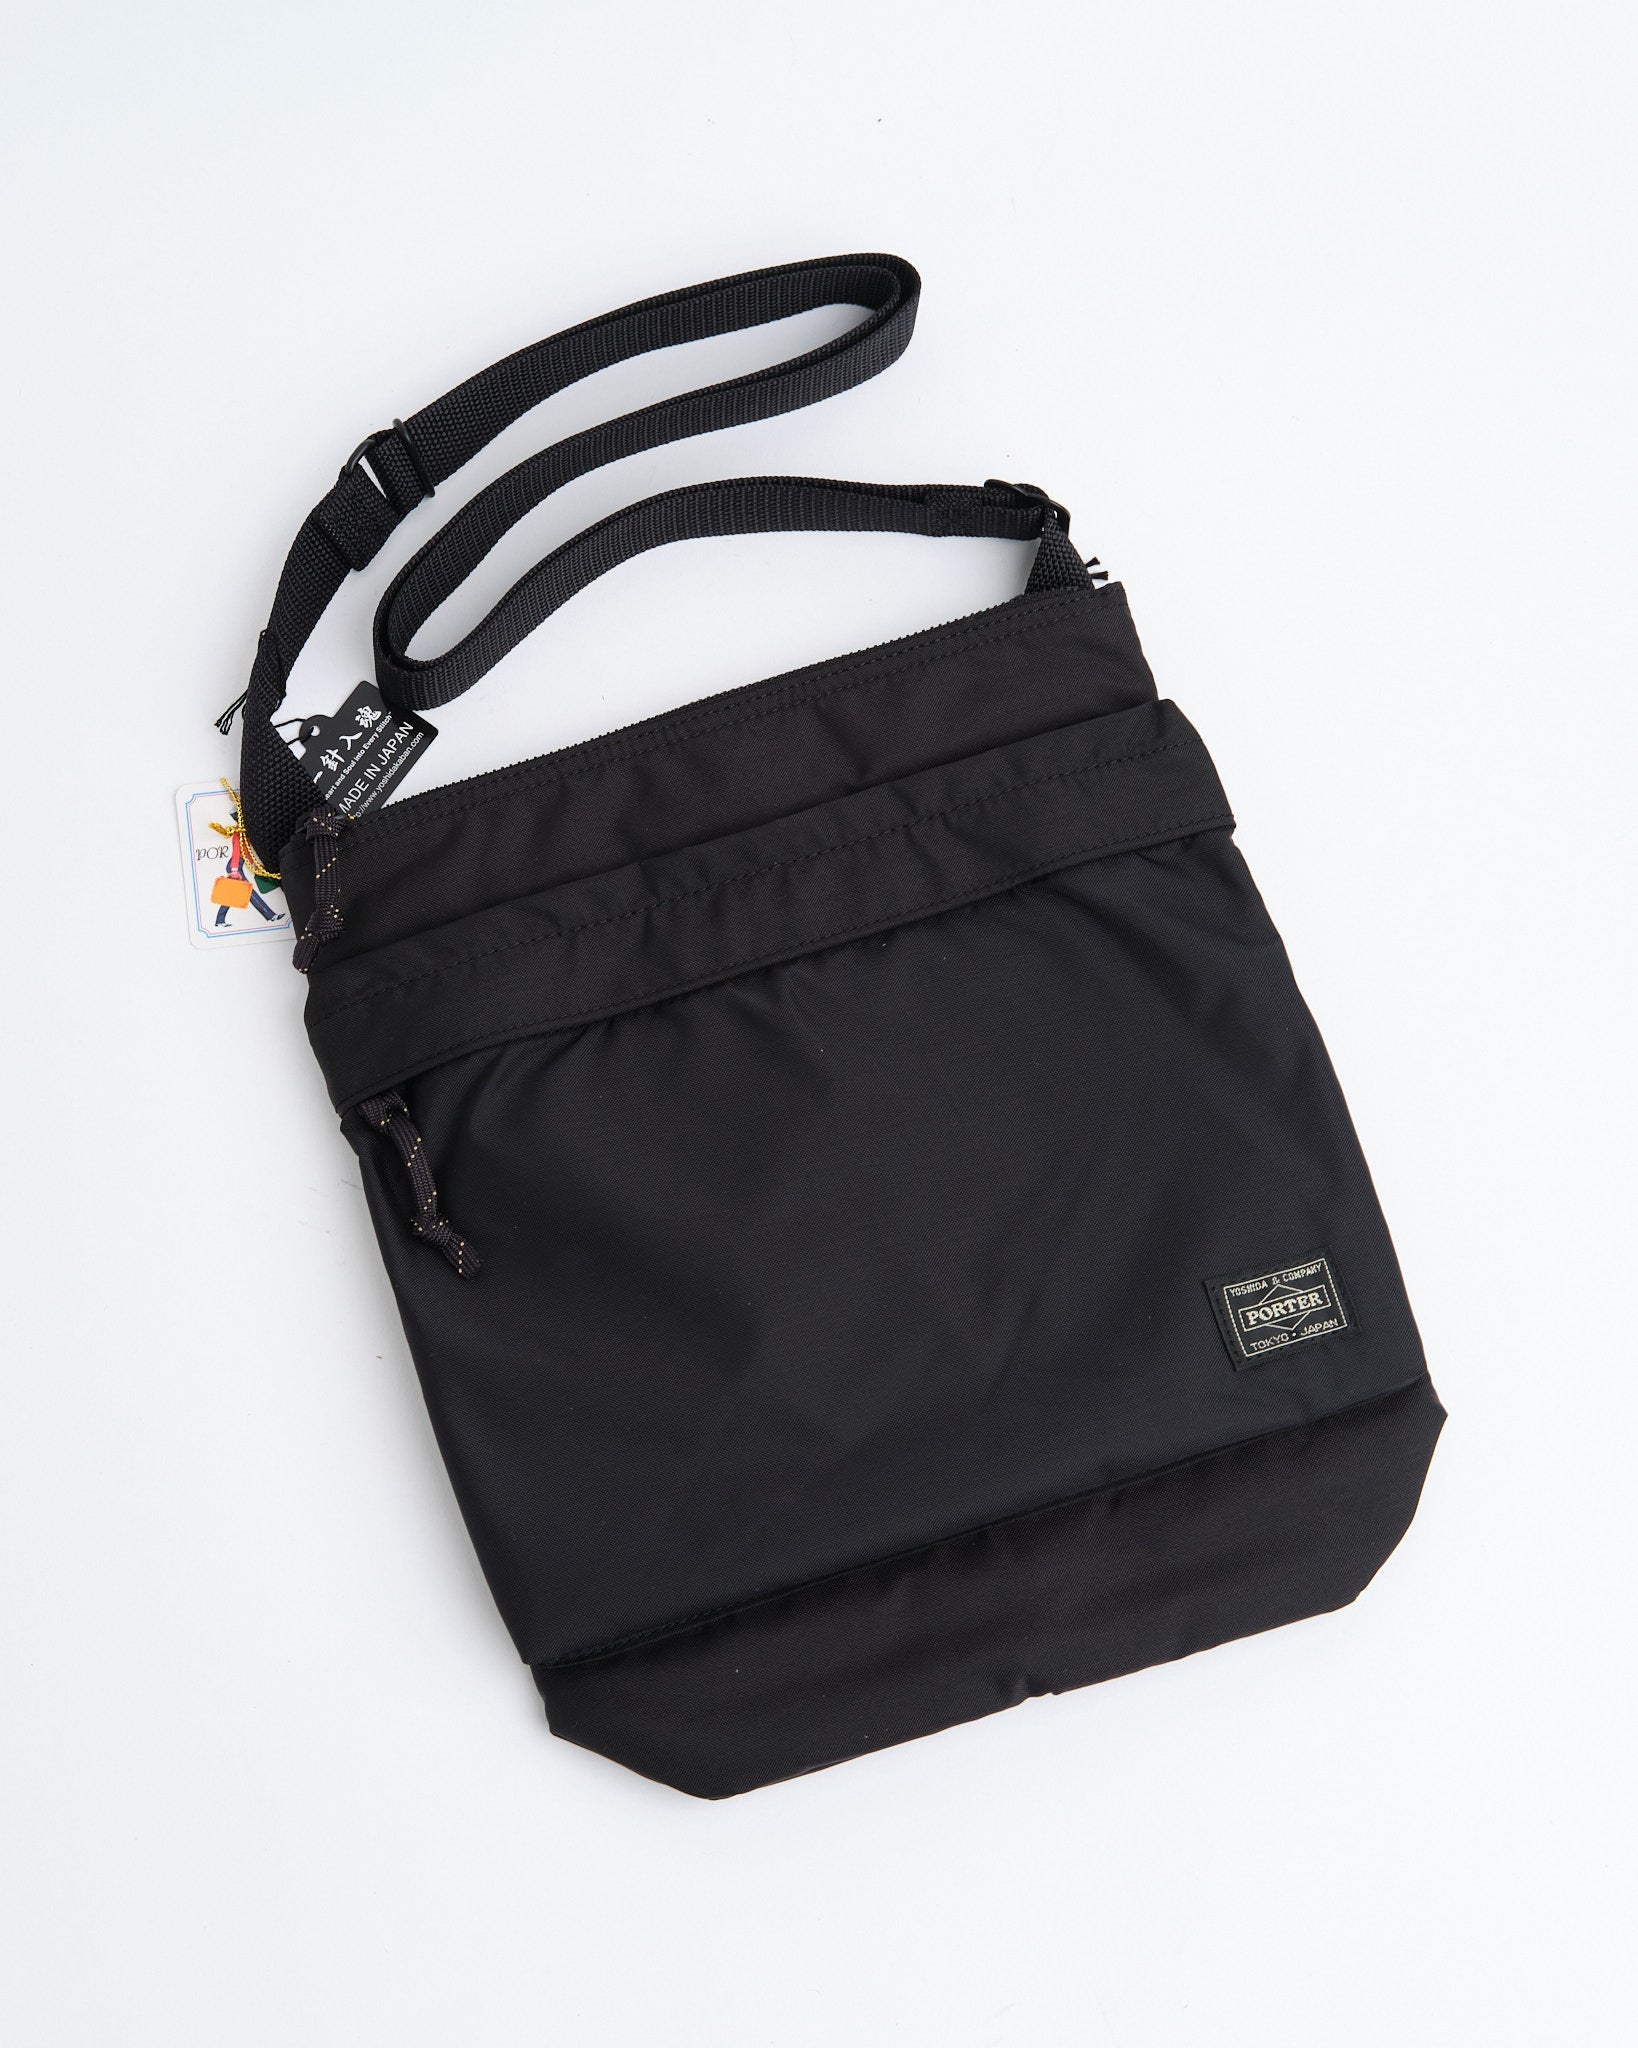 Designer Bags porter yoshida company tokyo japan shoulder bag